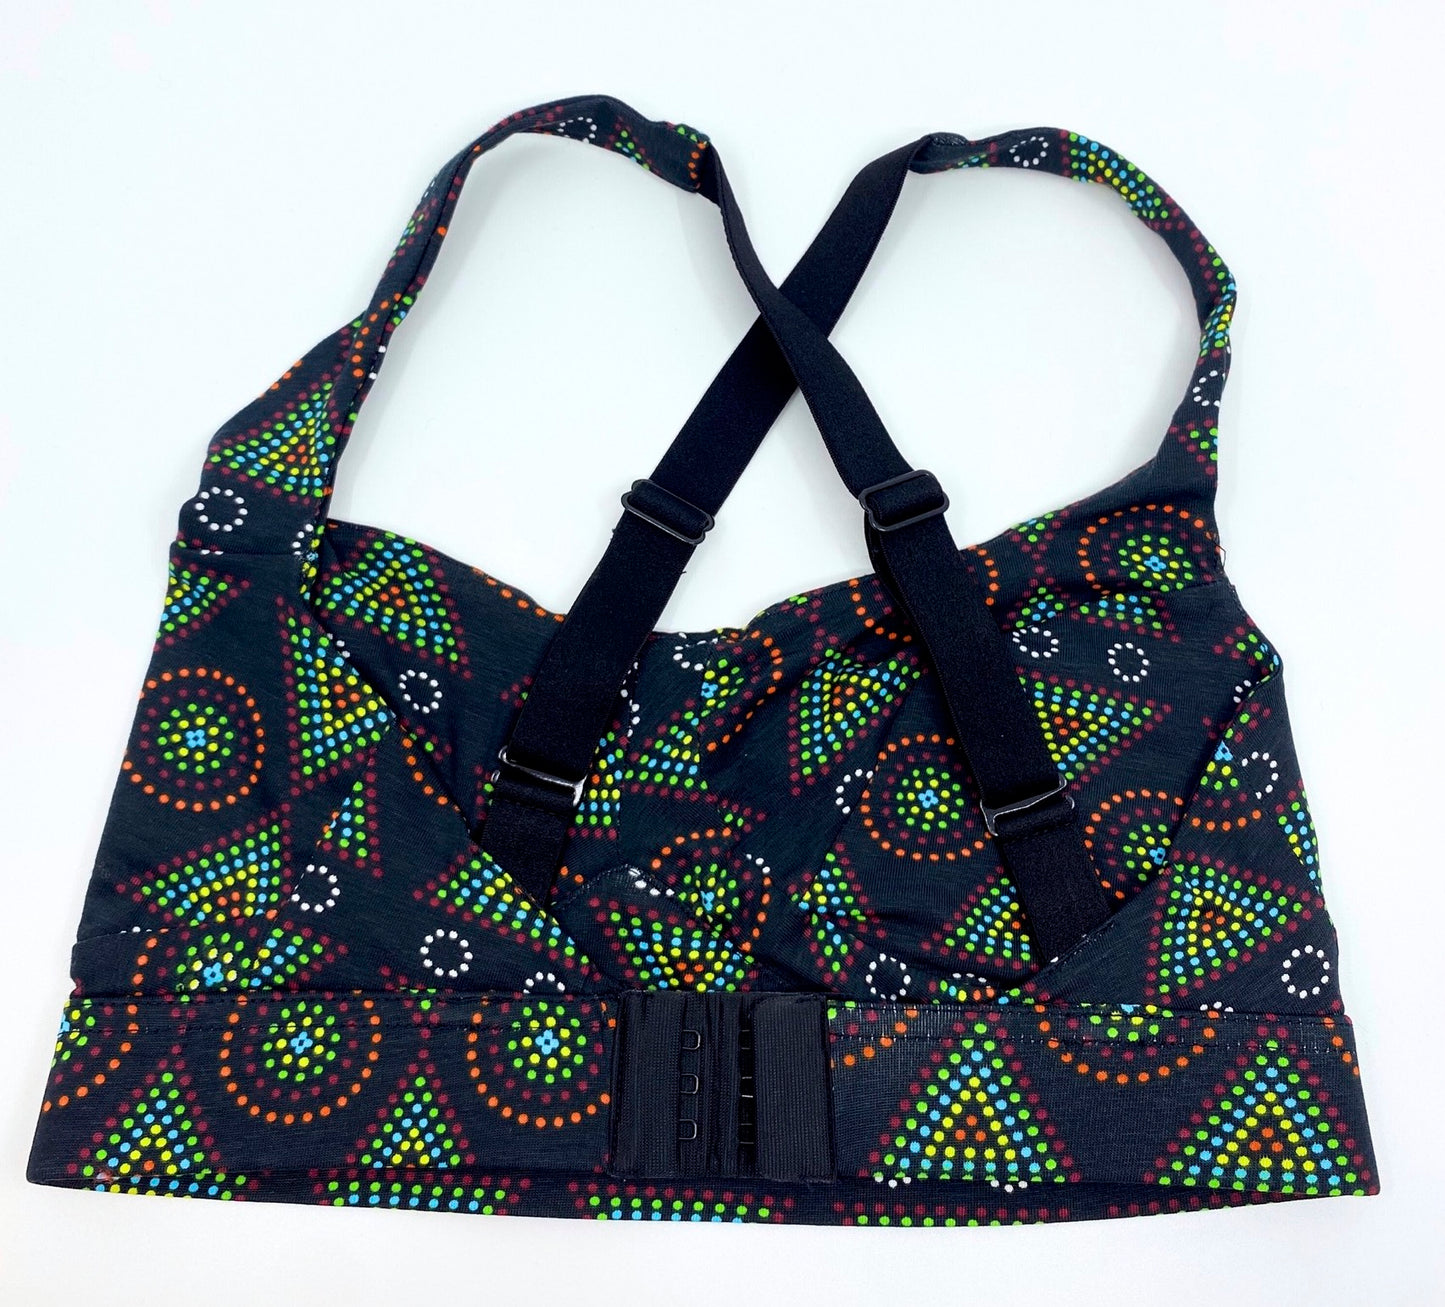 Women's organic cotton bra in black Mara print - more supportive style